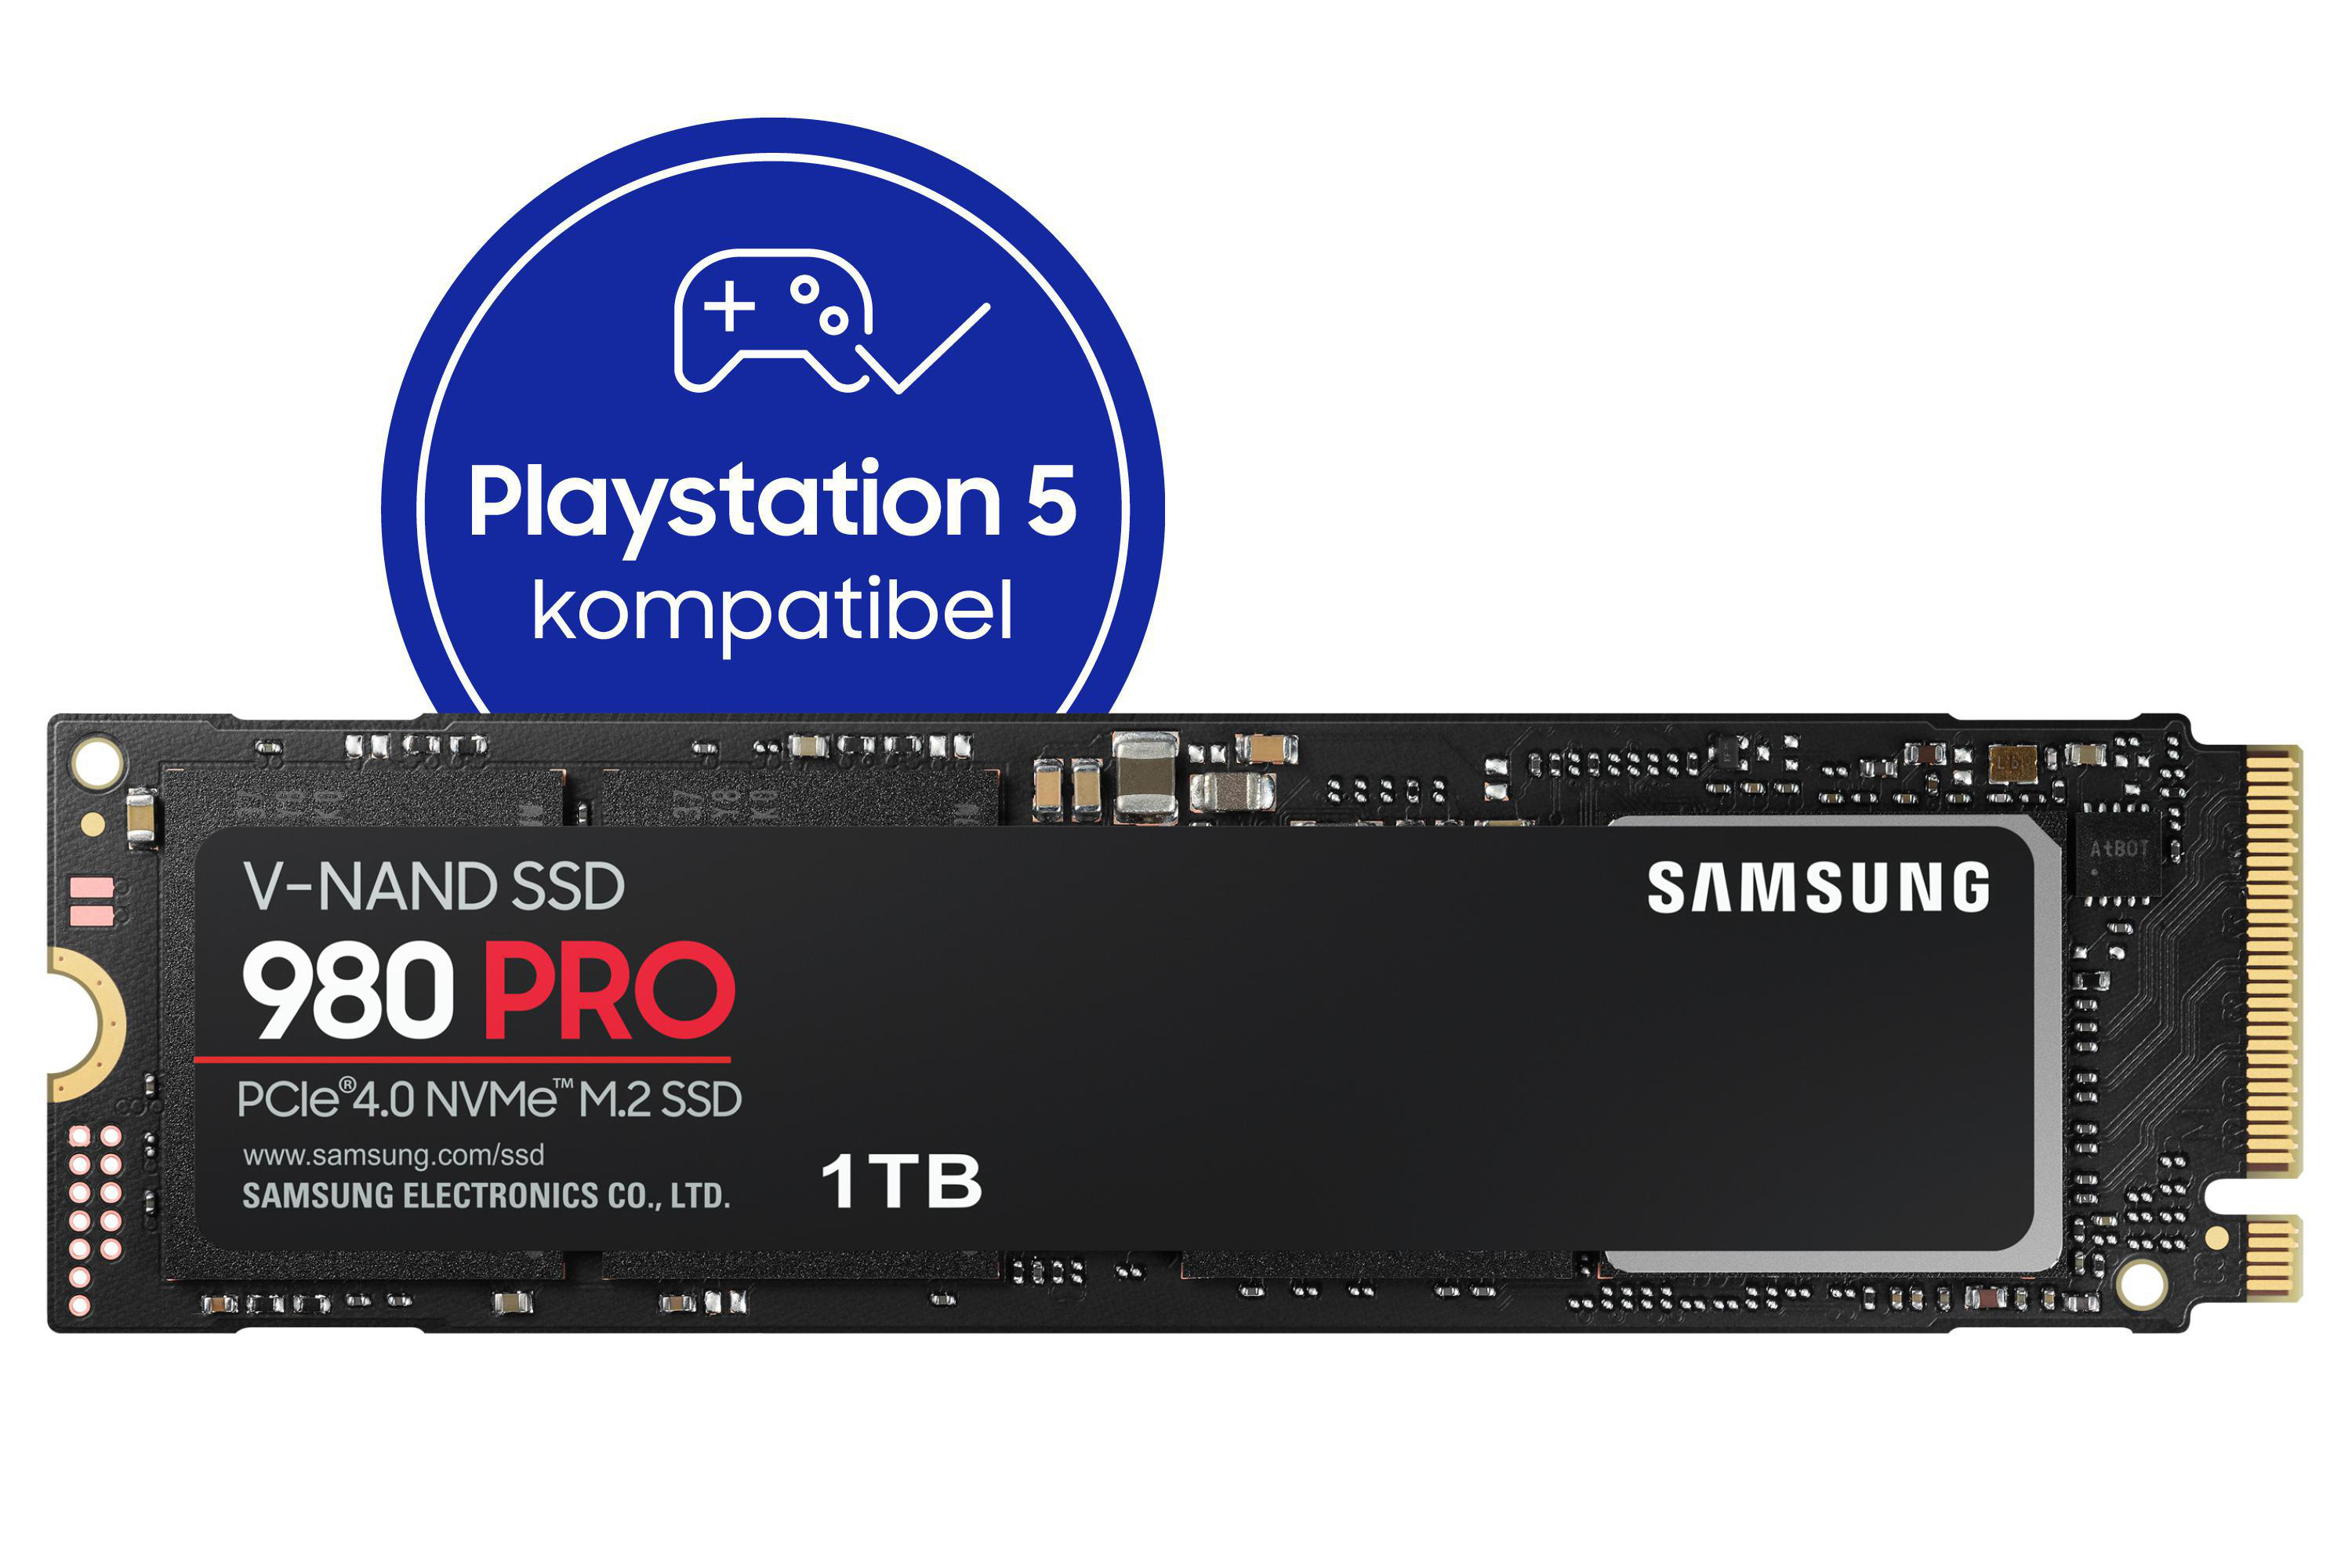 SAMSUNG PCIe 4.0, Schwarz Gaming via intern, Festplatte, Playstation Festplatte 5 1TB kompatibel, M.2 SSD Retail, NVMe